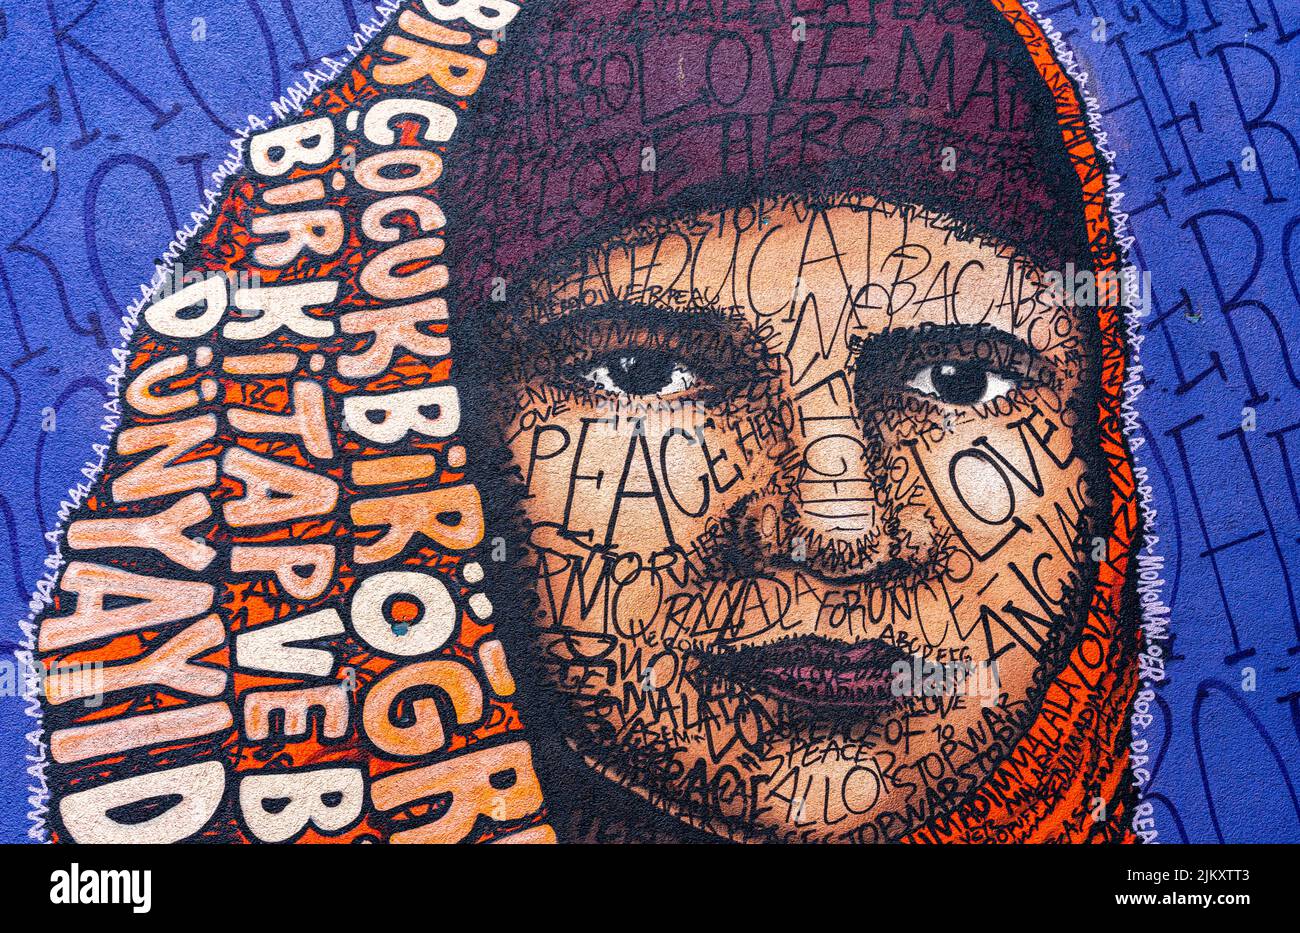 Mural by artist Highero depicting Pakistani Nobel peace prize winner Malala Yousafzai. Moda street, Kadikoy, Istanbul, Turkey Stock Photo